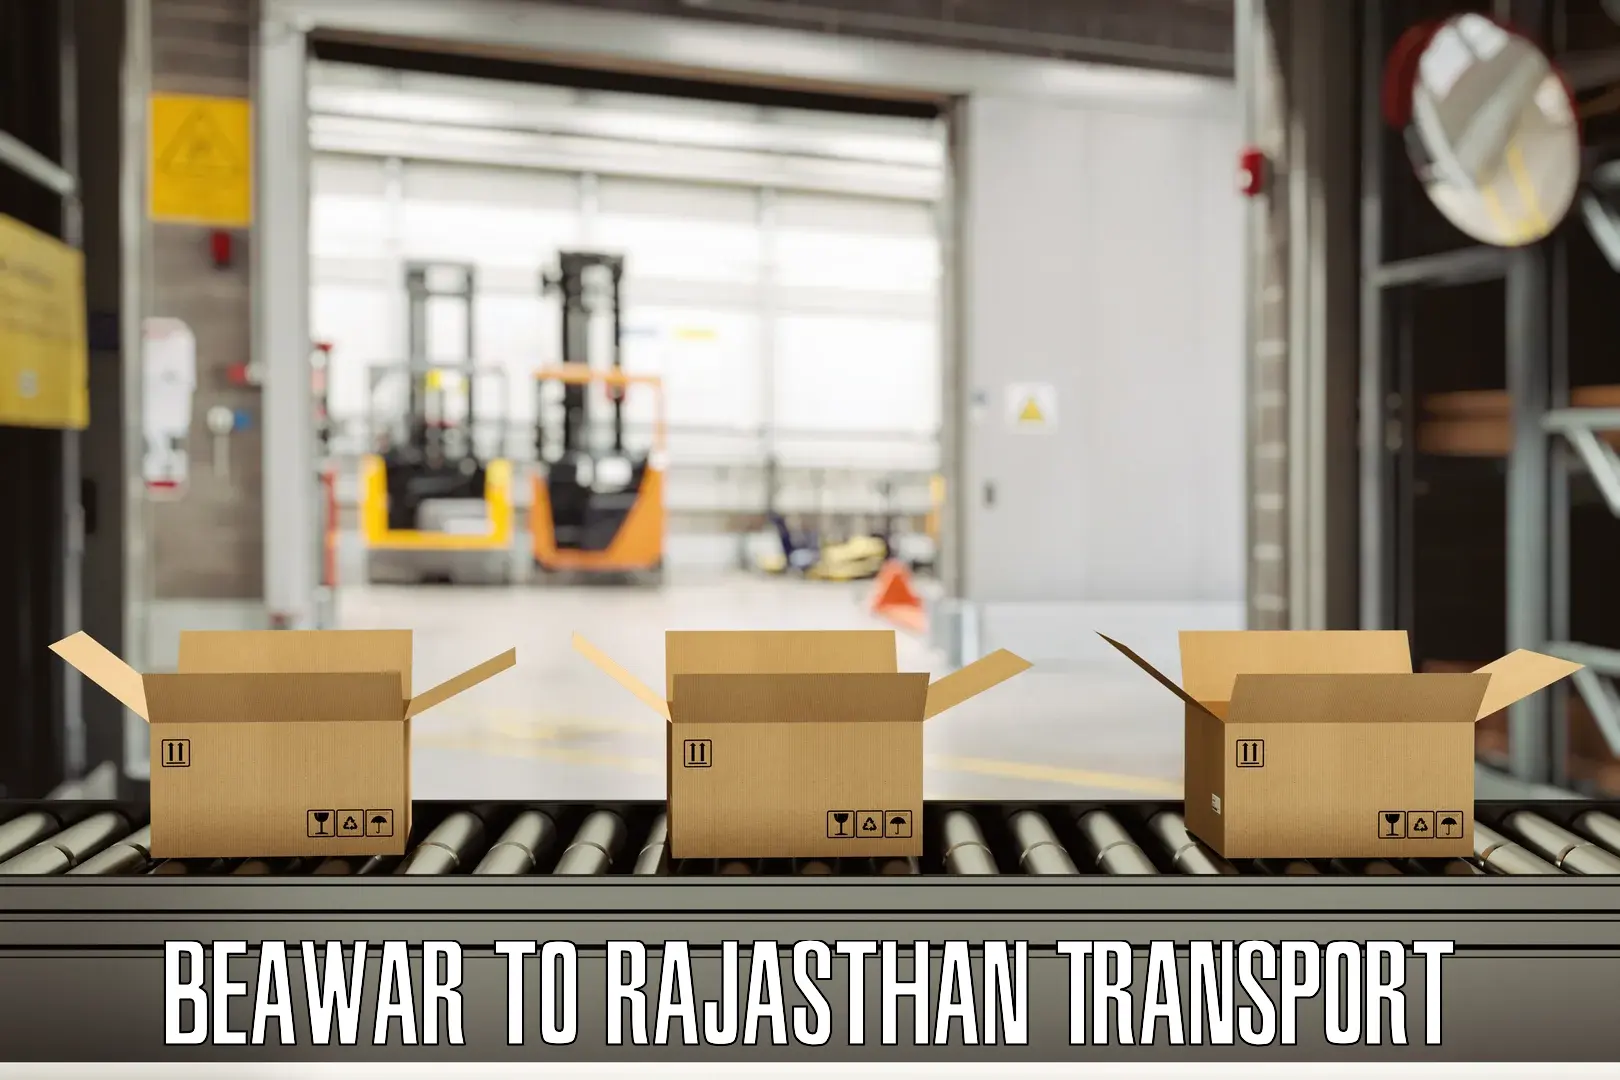 Transport shared services Beawar to Beawar